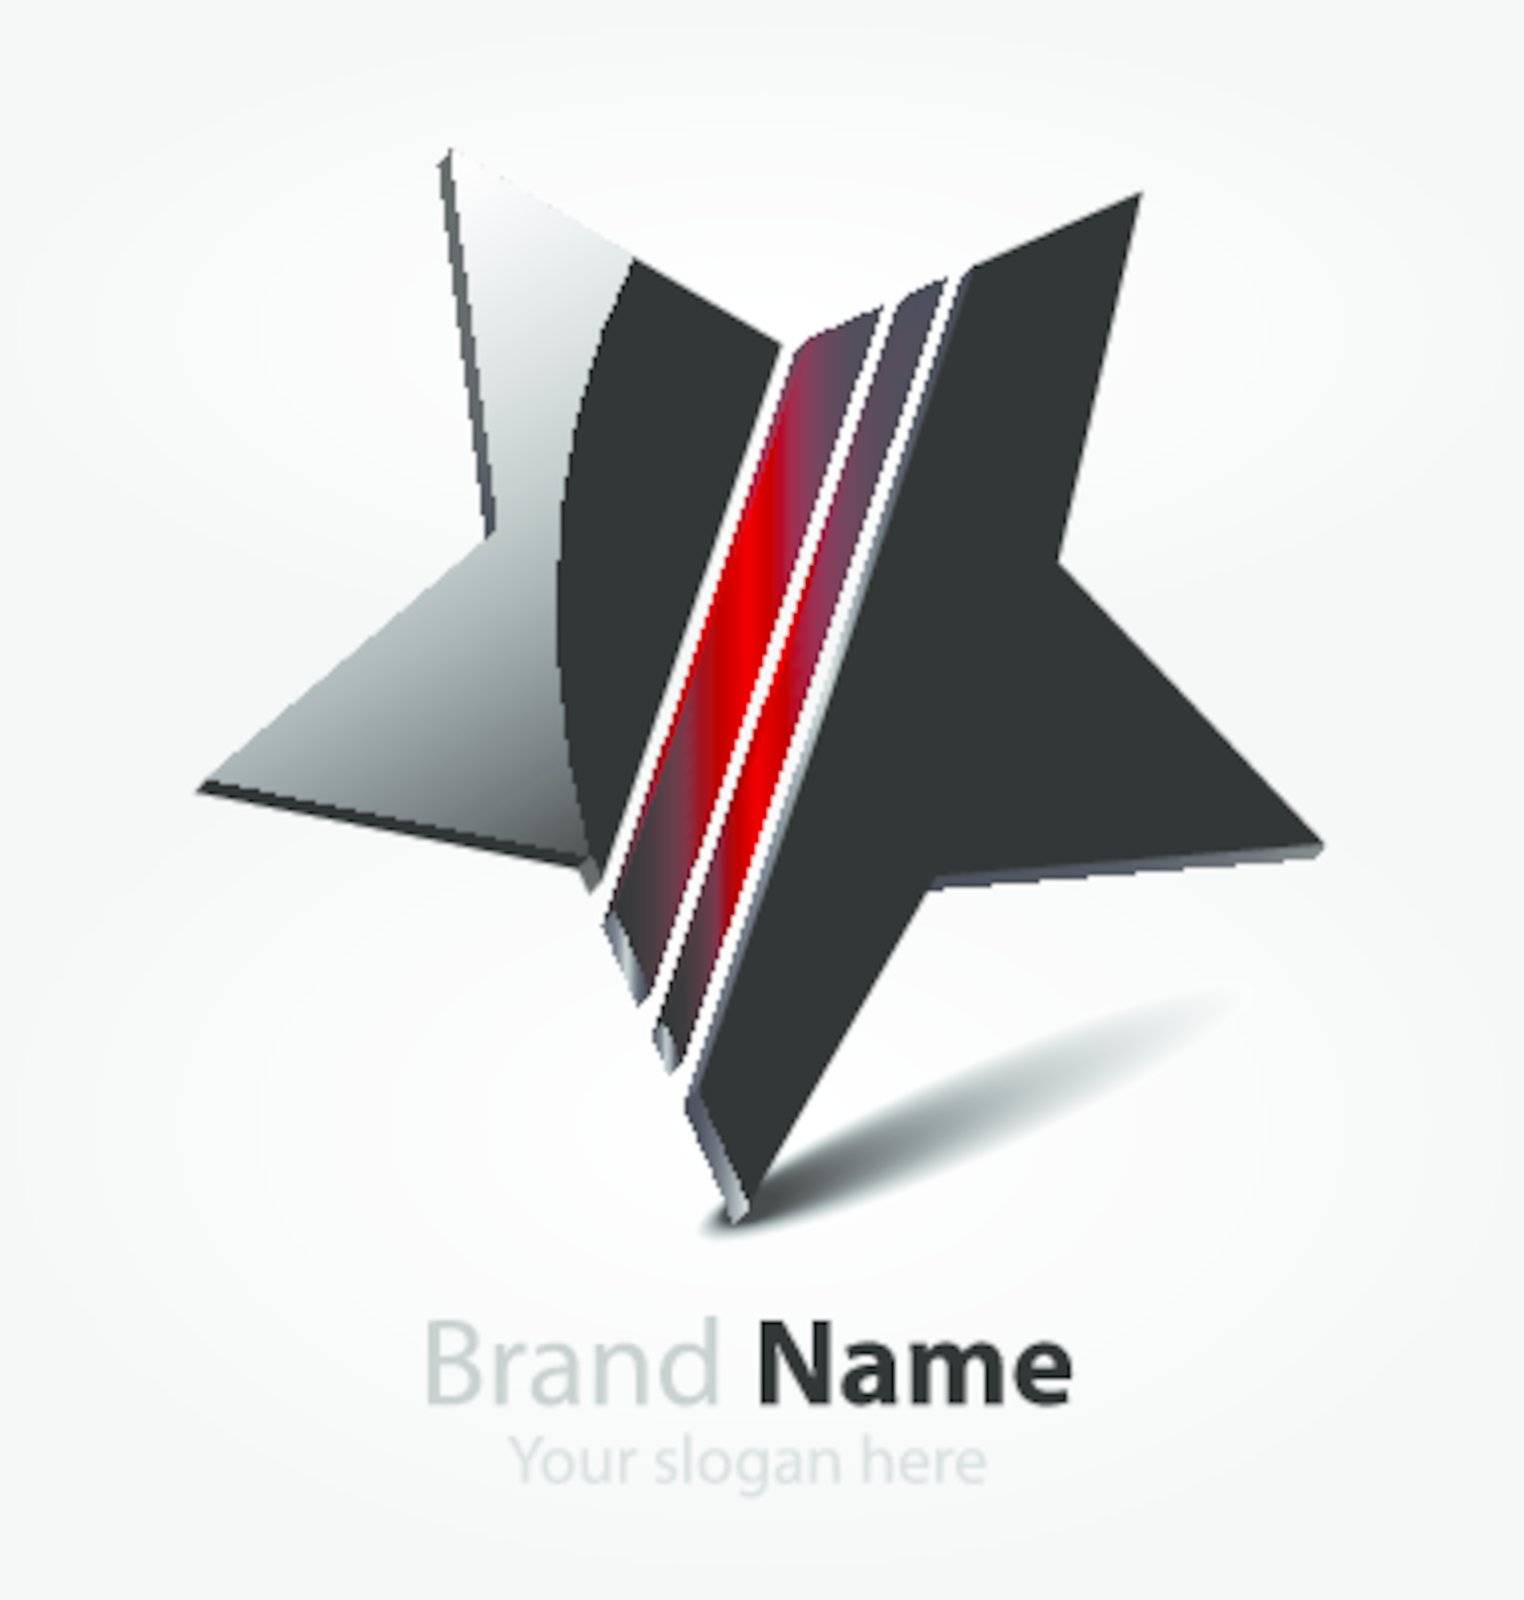 Originally designed vector brand black star logo